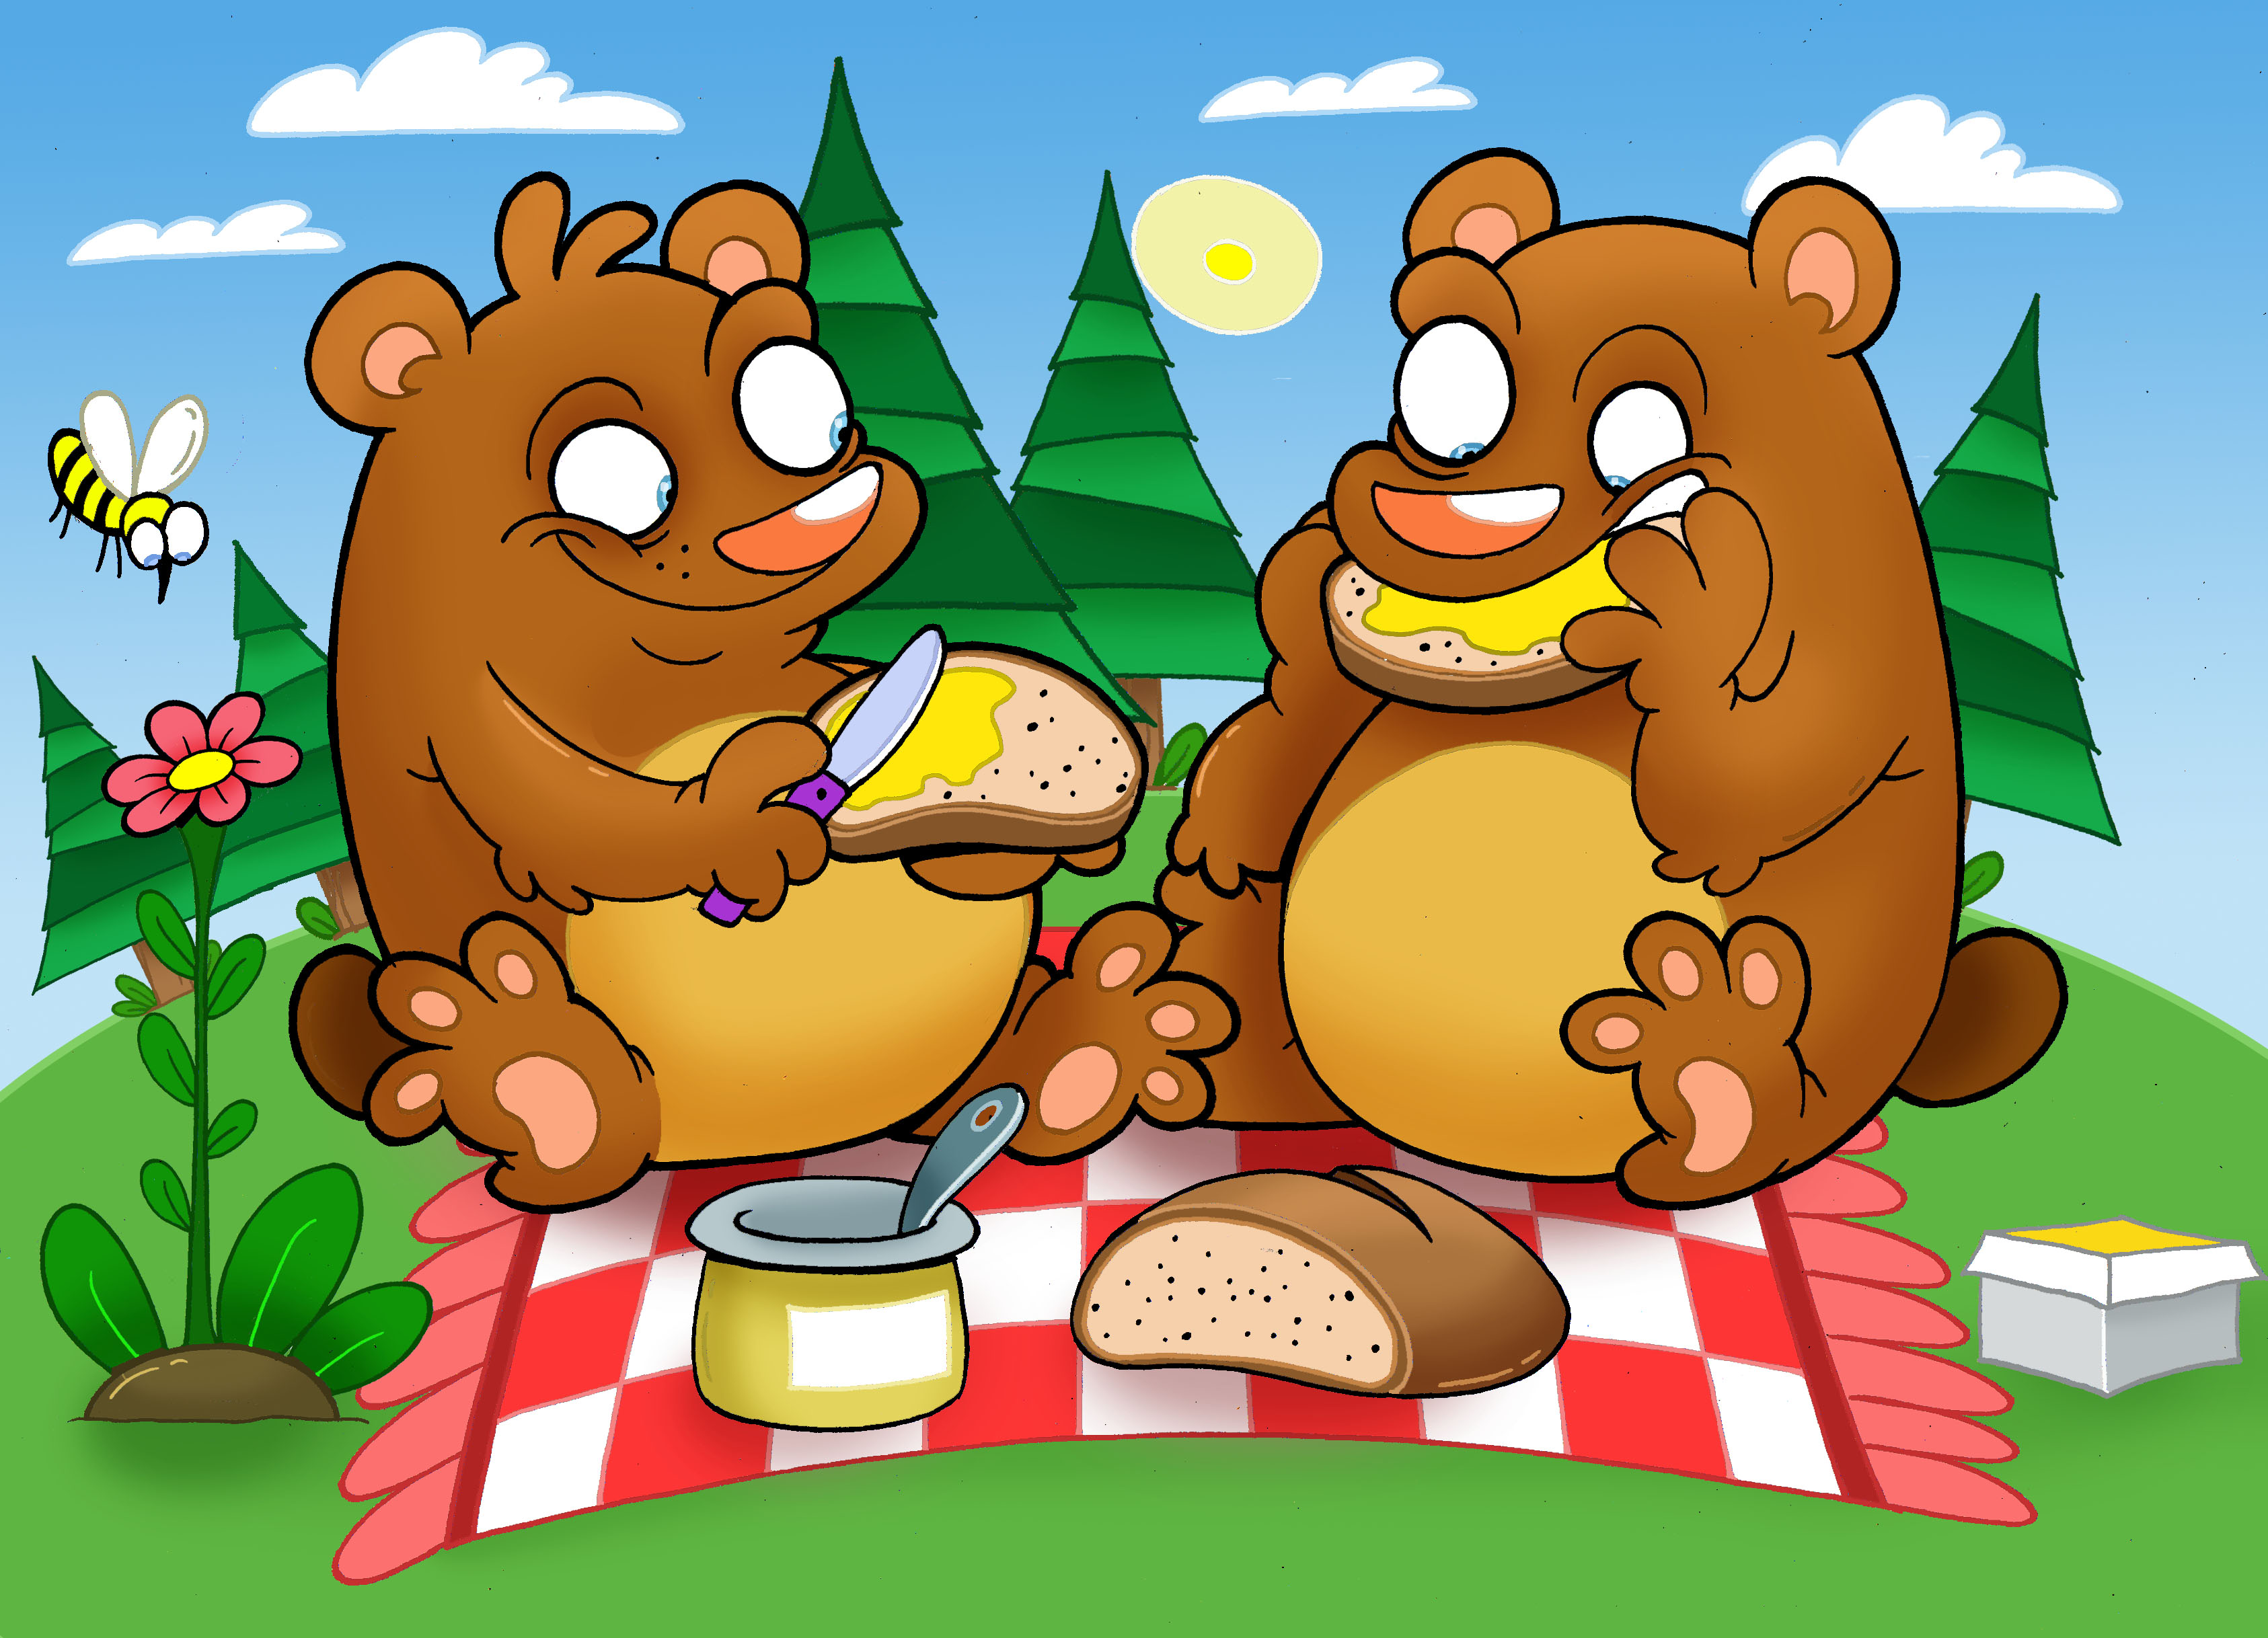 Medve-Maci-Piknik-Mese-Kep-Illusztracio.jpg